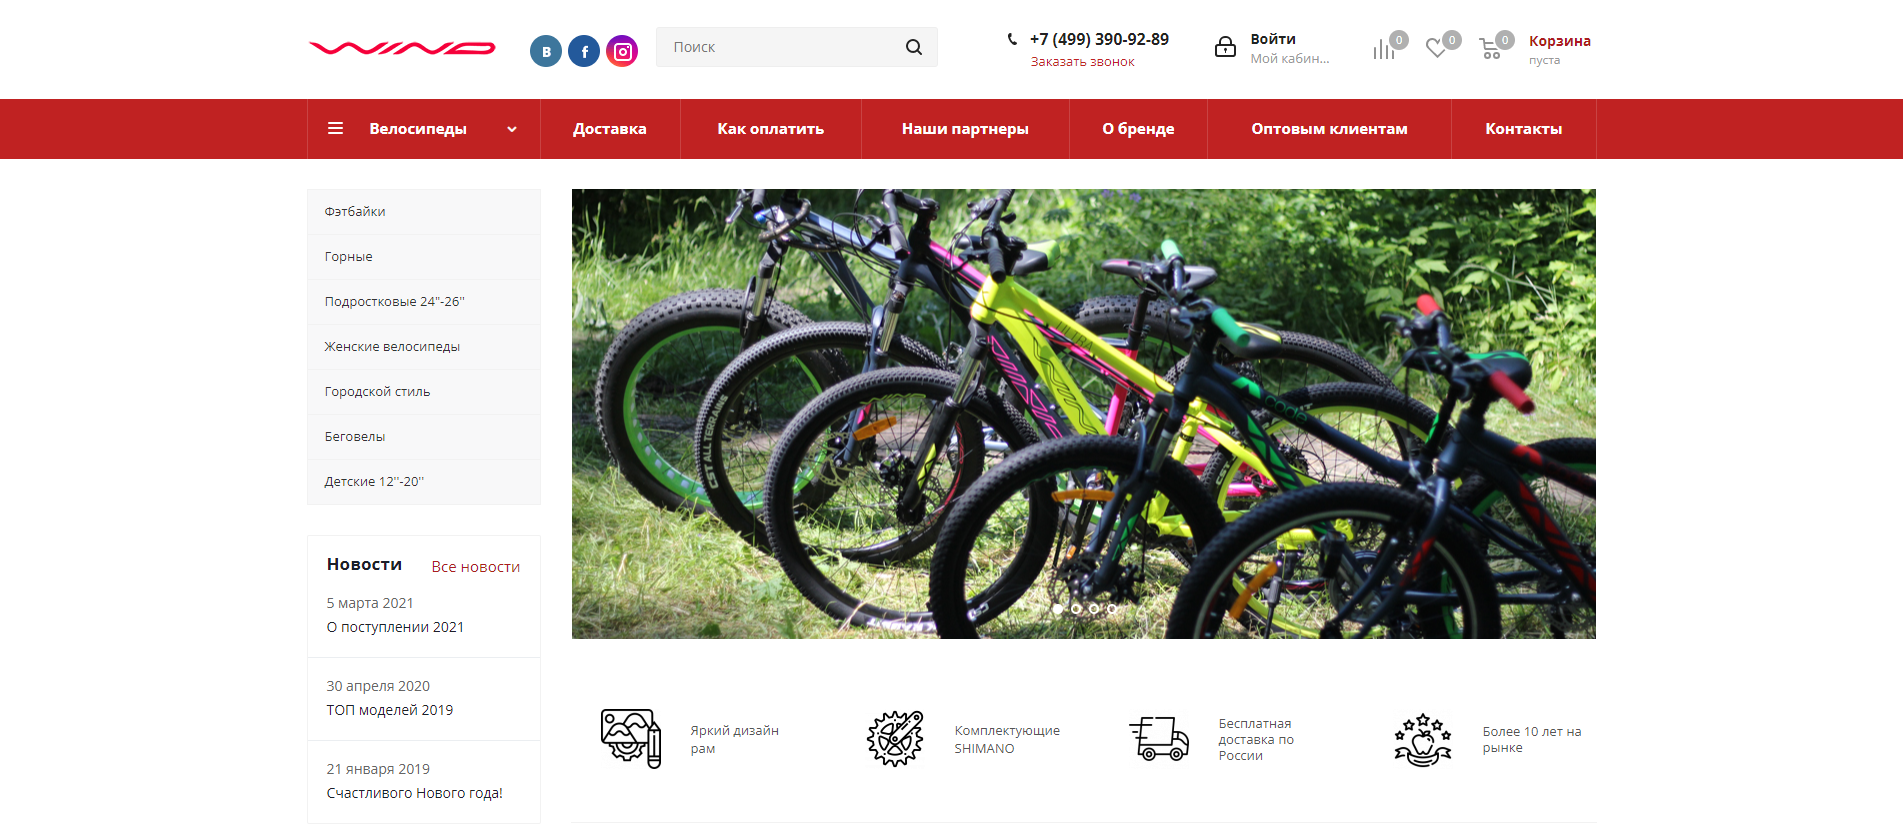 Интернет-магазин велосипедов Wind Bikes - реализация проекта